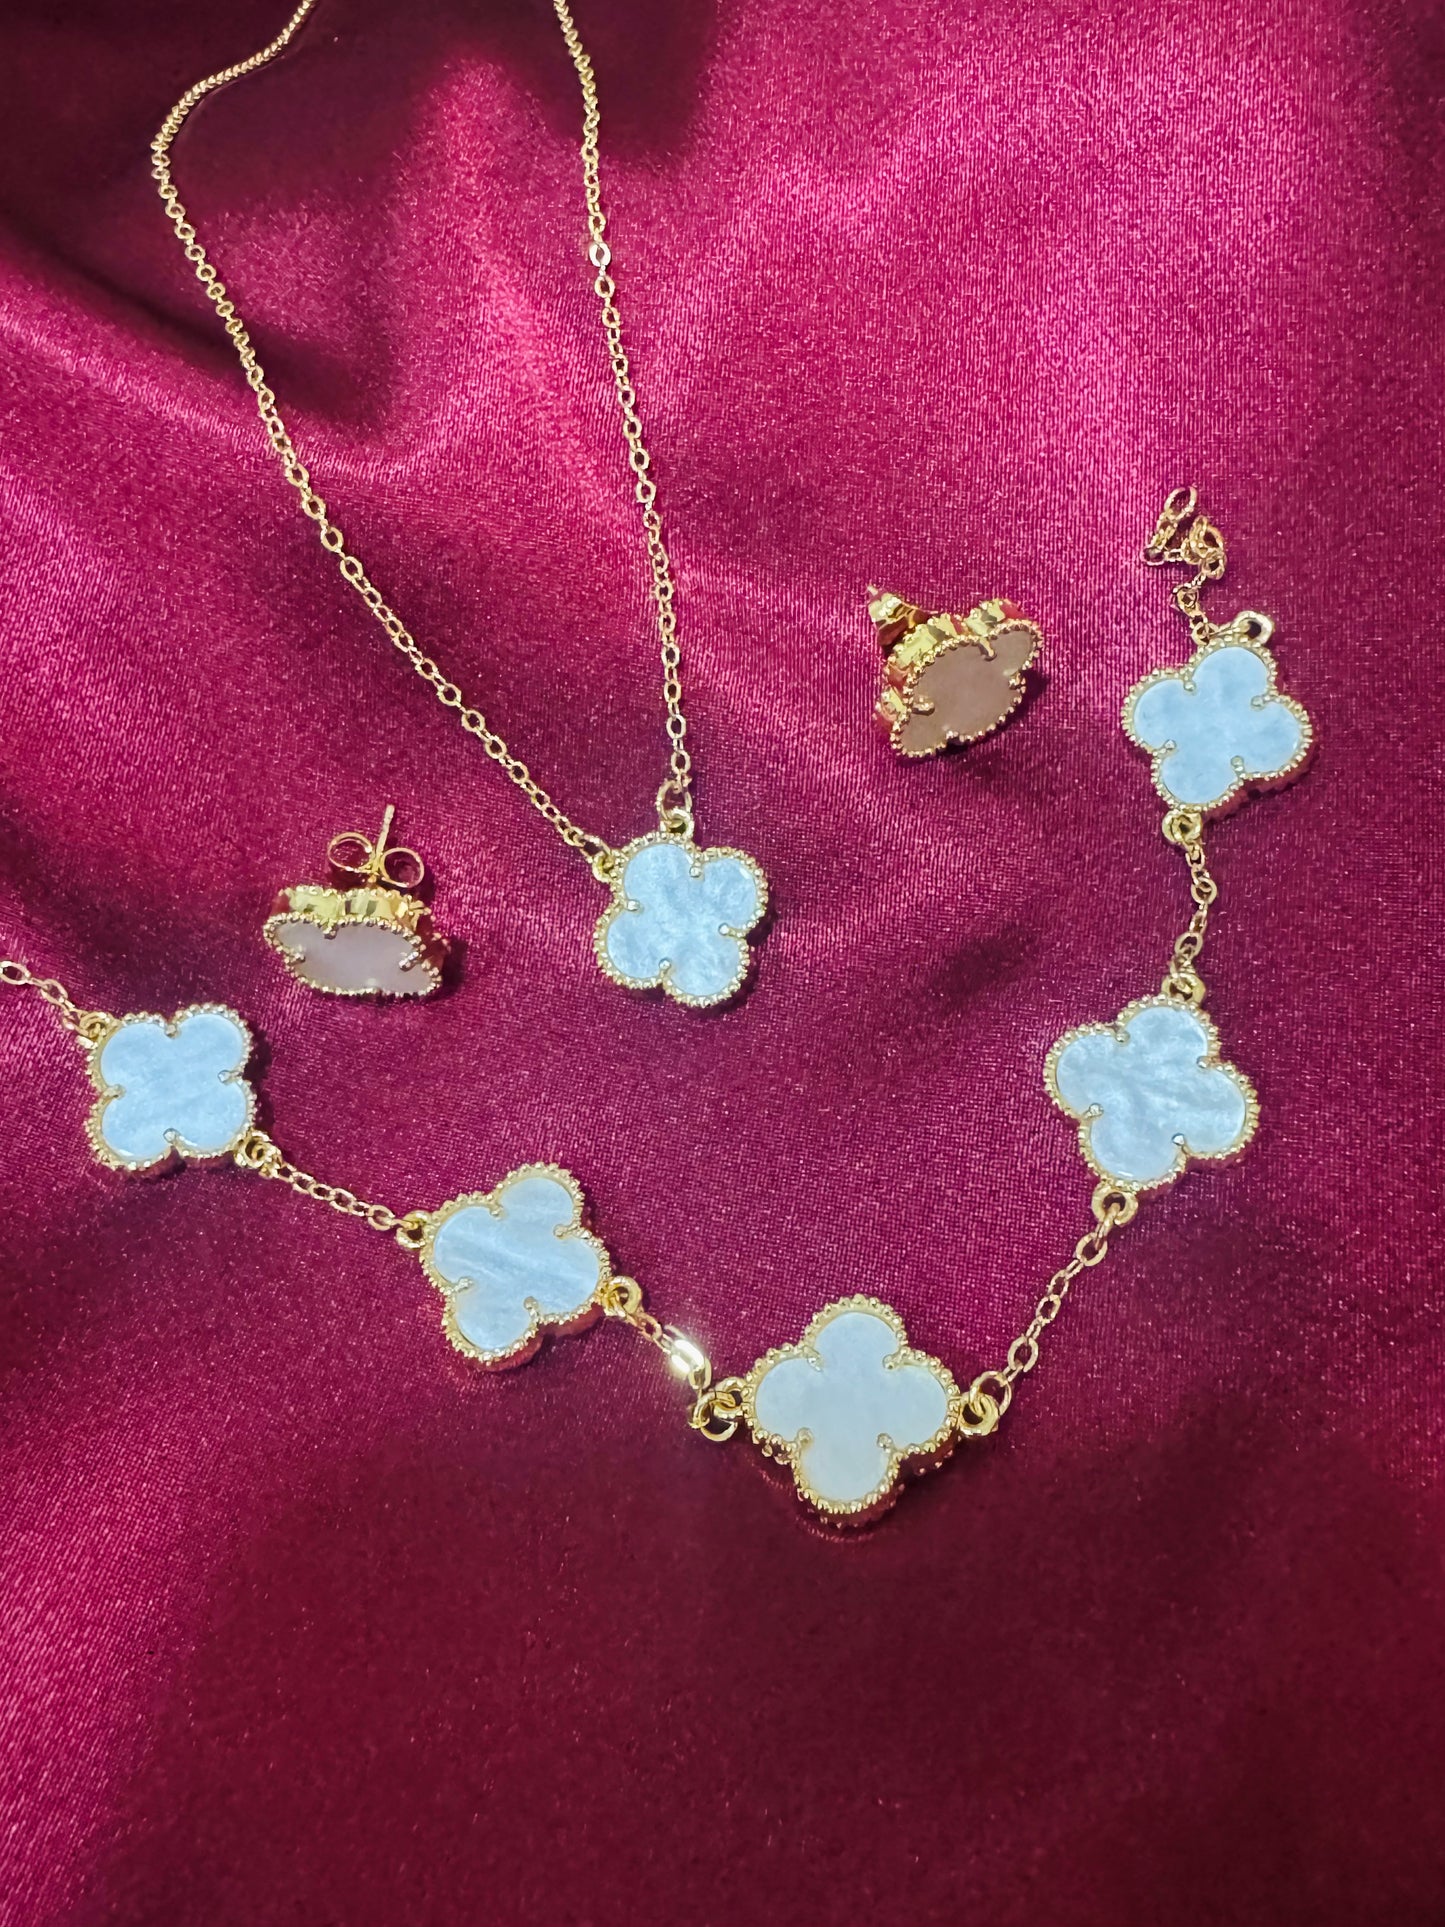 Four Leaf Clover Necklace, Bracelet and Earrings Set